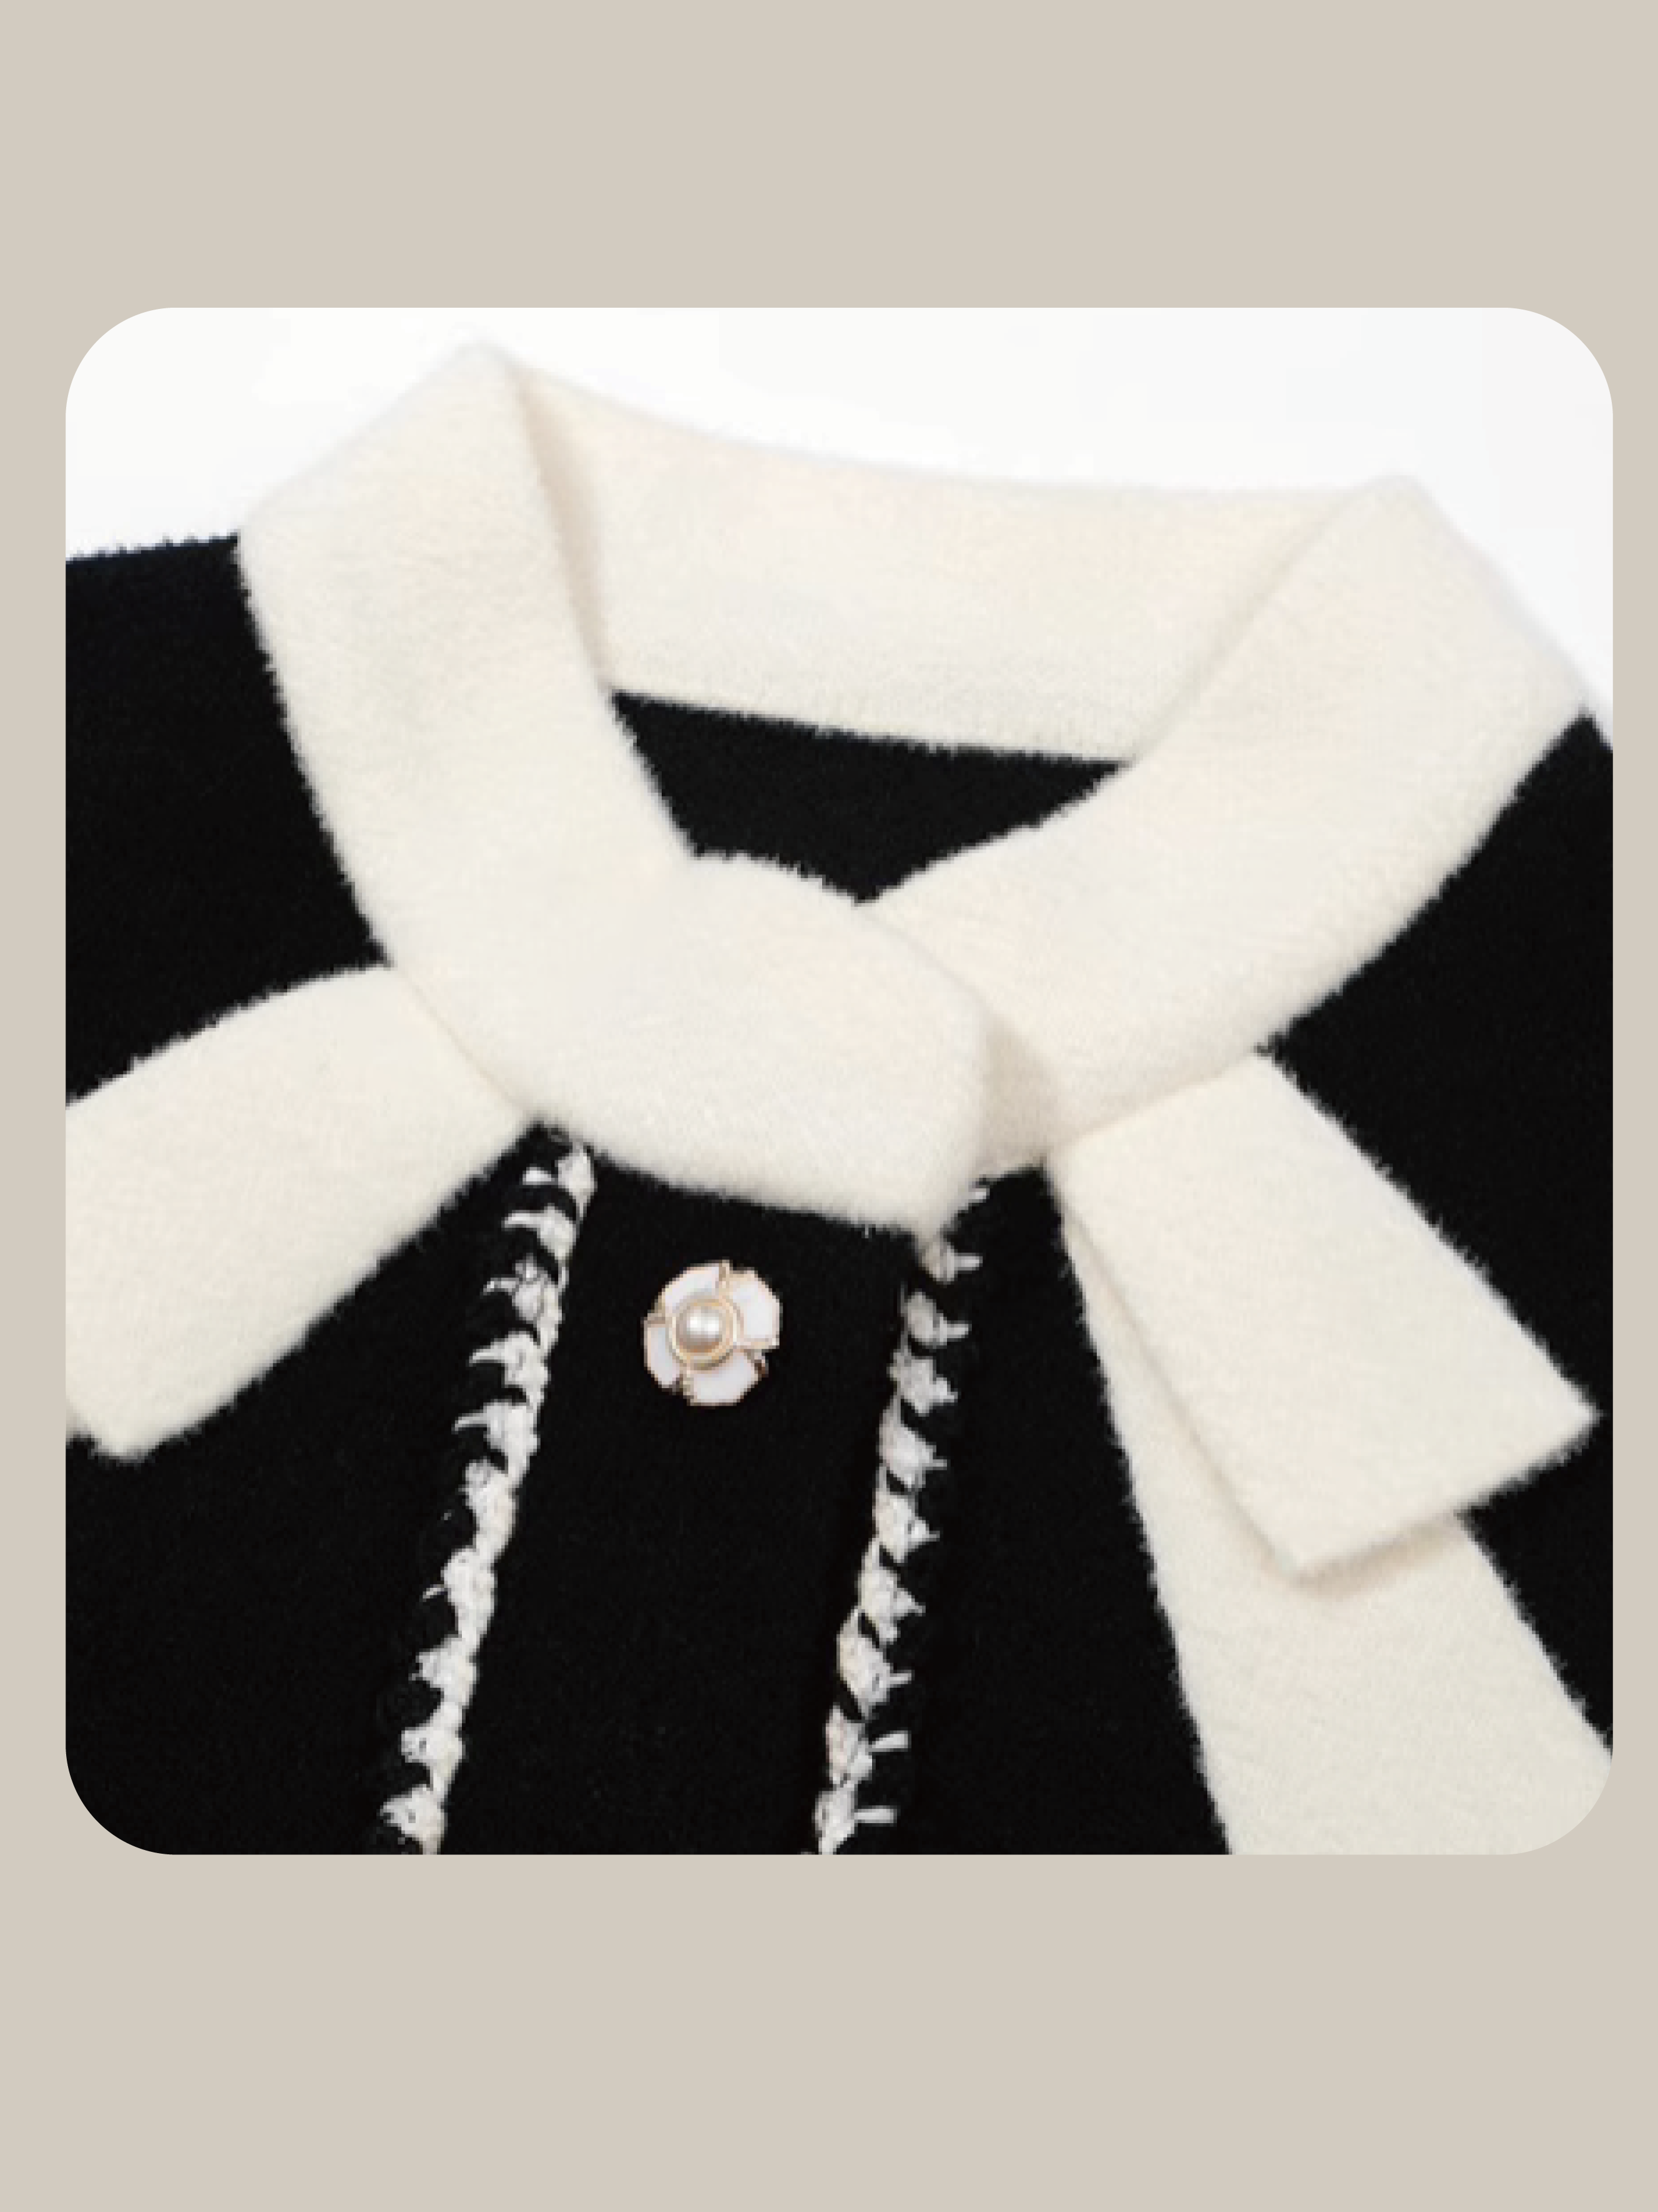 Texture Pearl Button Woolen Jacket